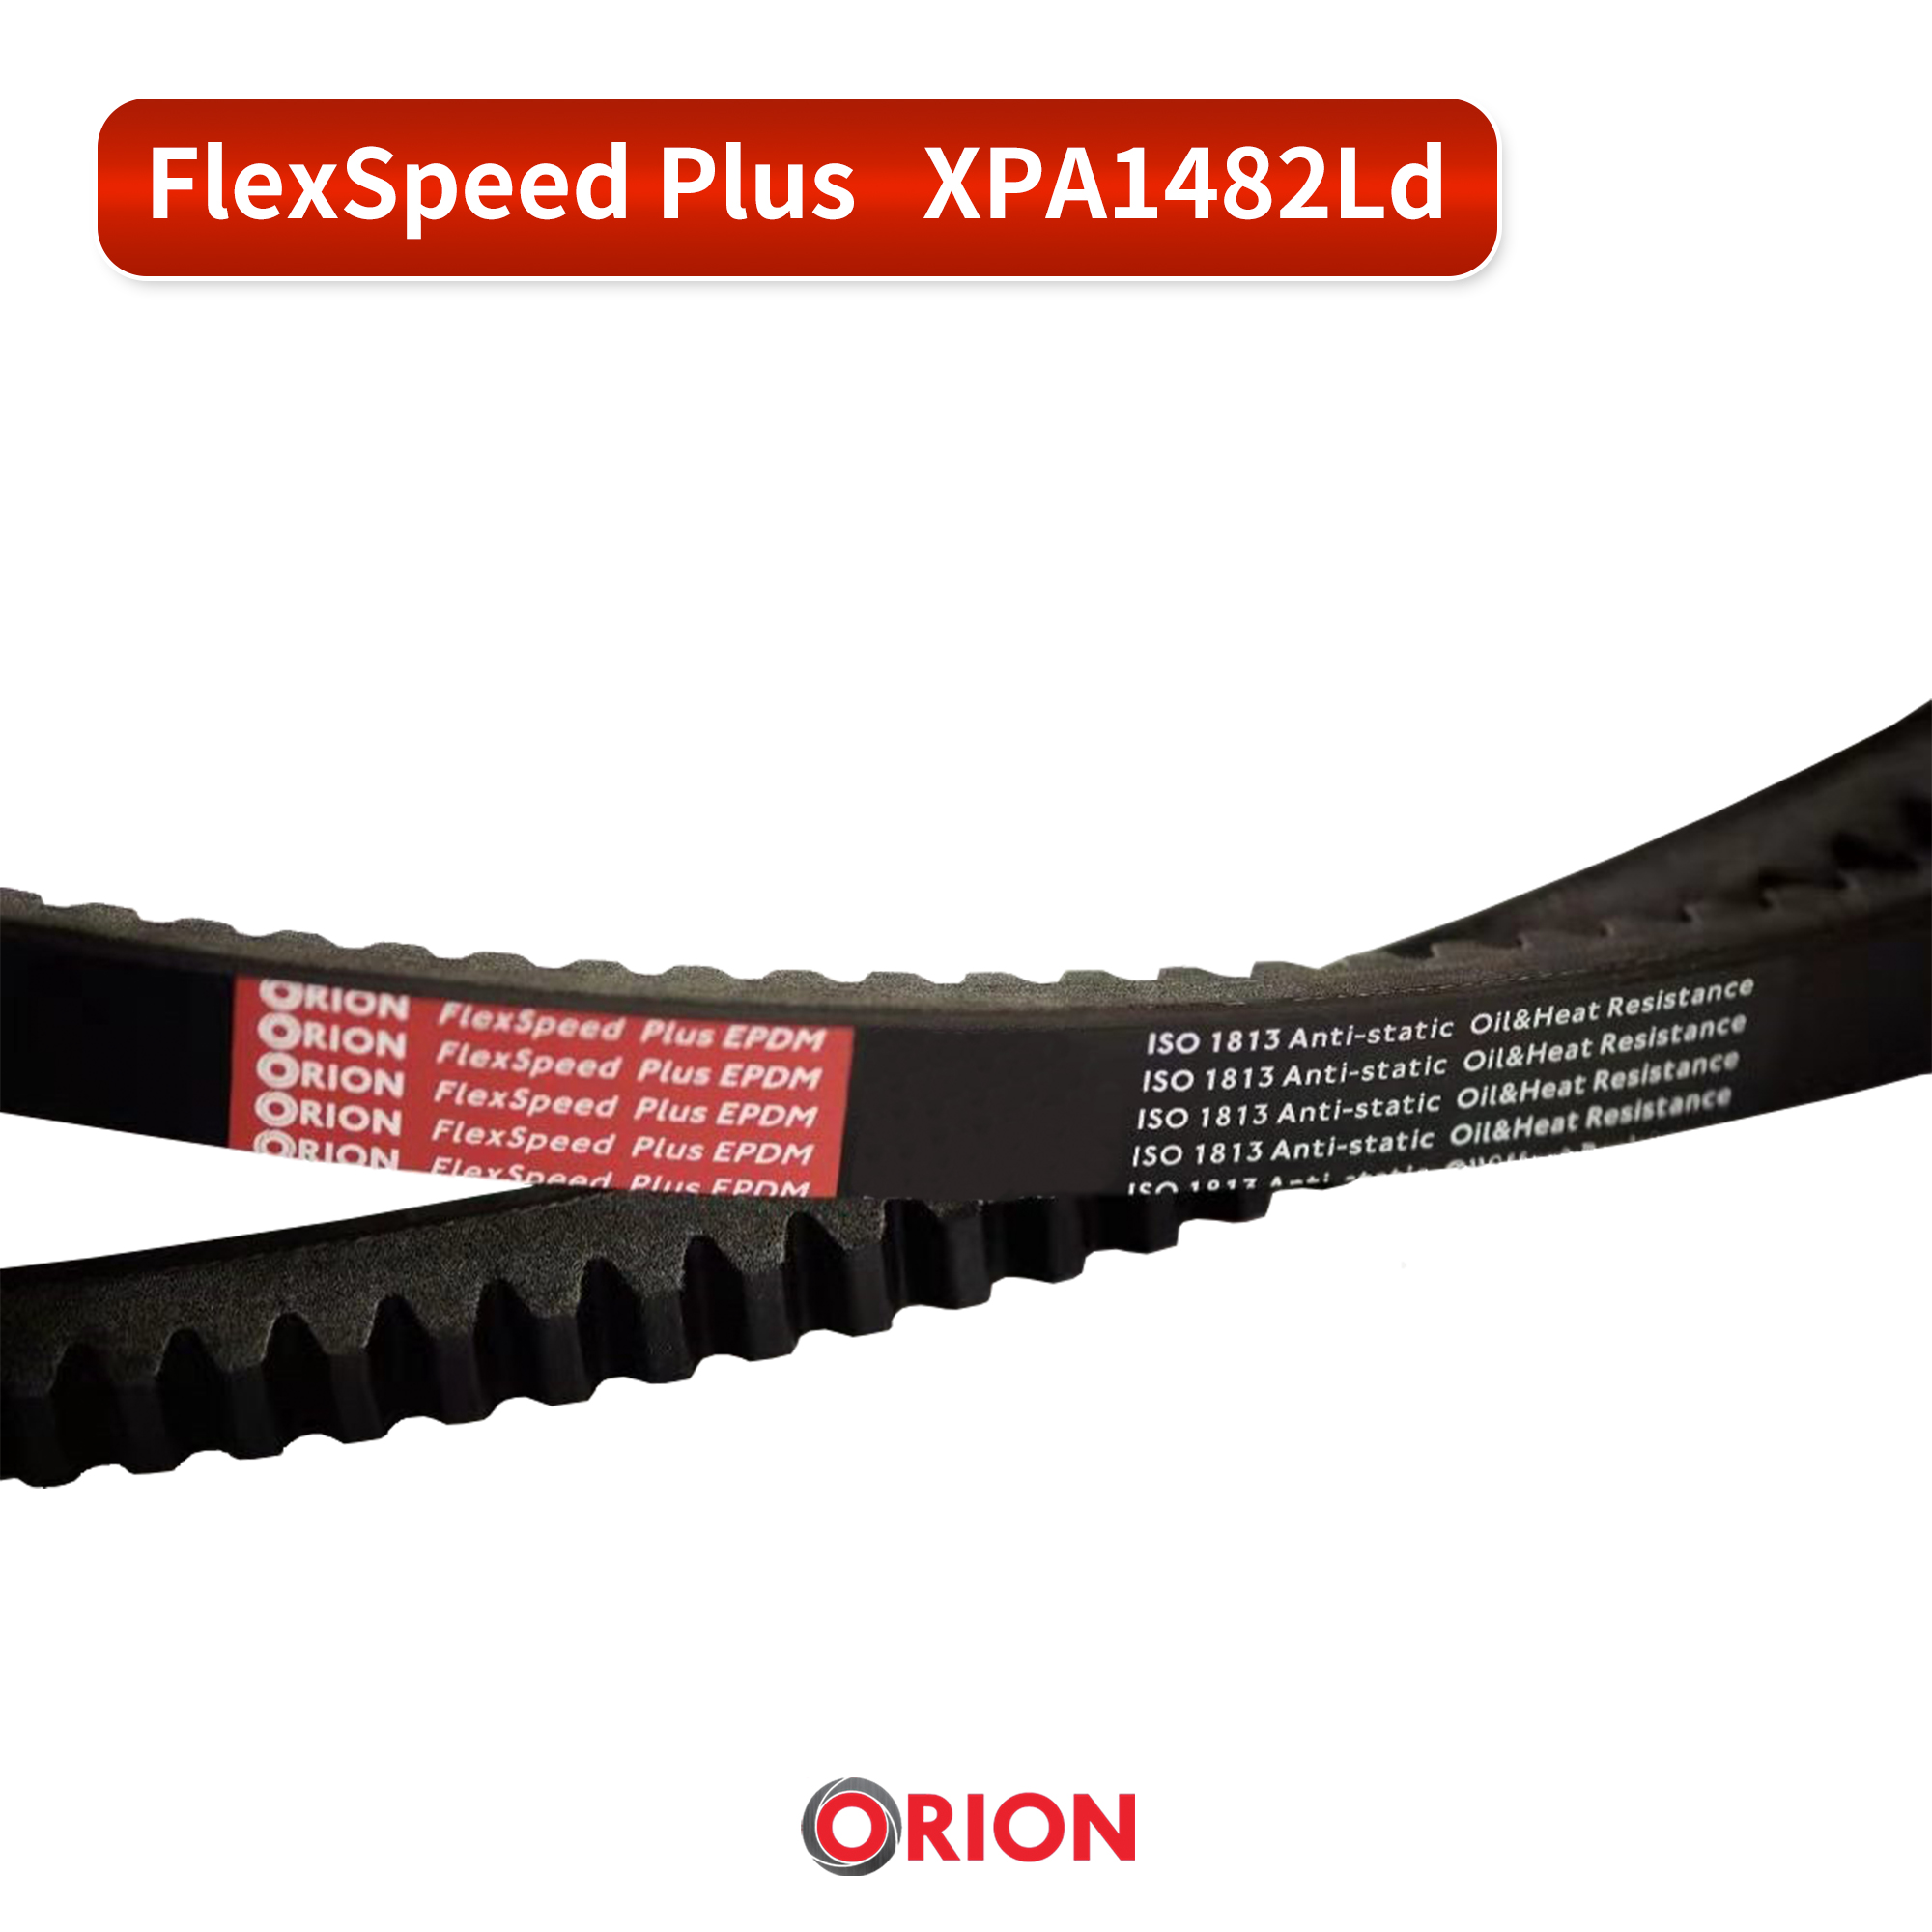 ORION FlexSpeed Plus XPA1482 Ld （红标）